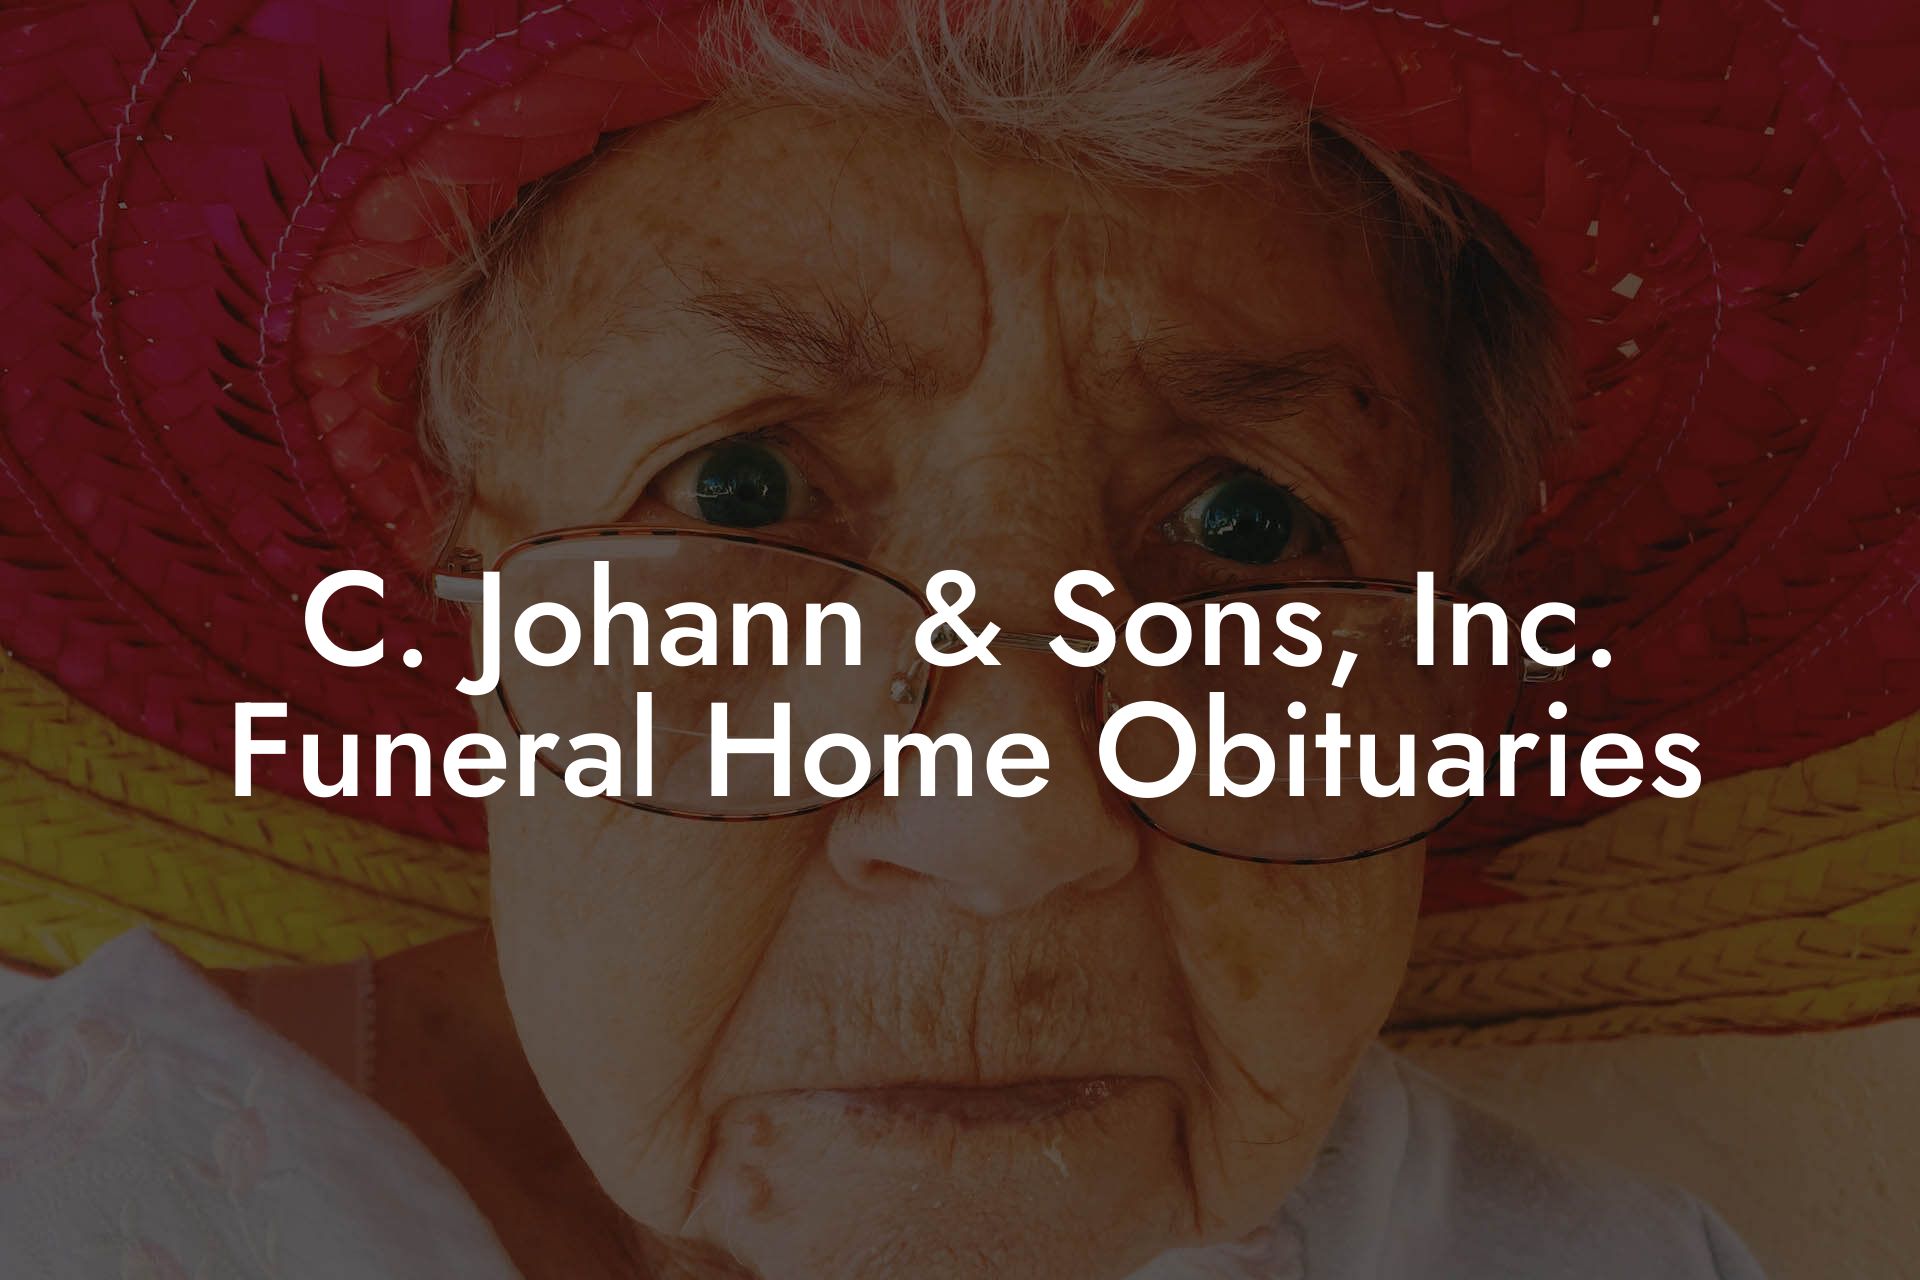 C. Johann & Sons, Inc. Funeral Home Obituaries